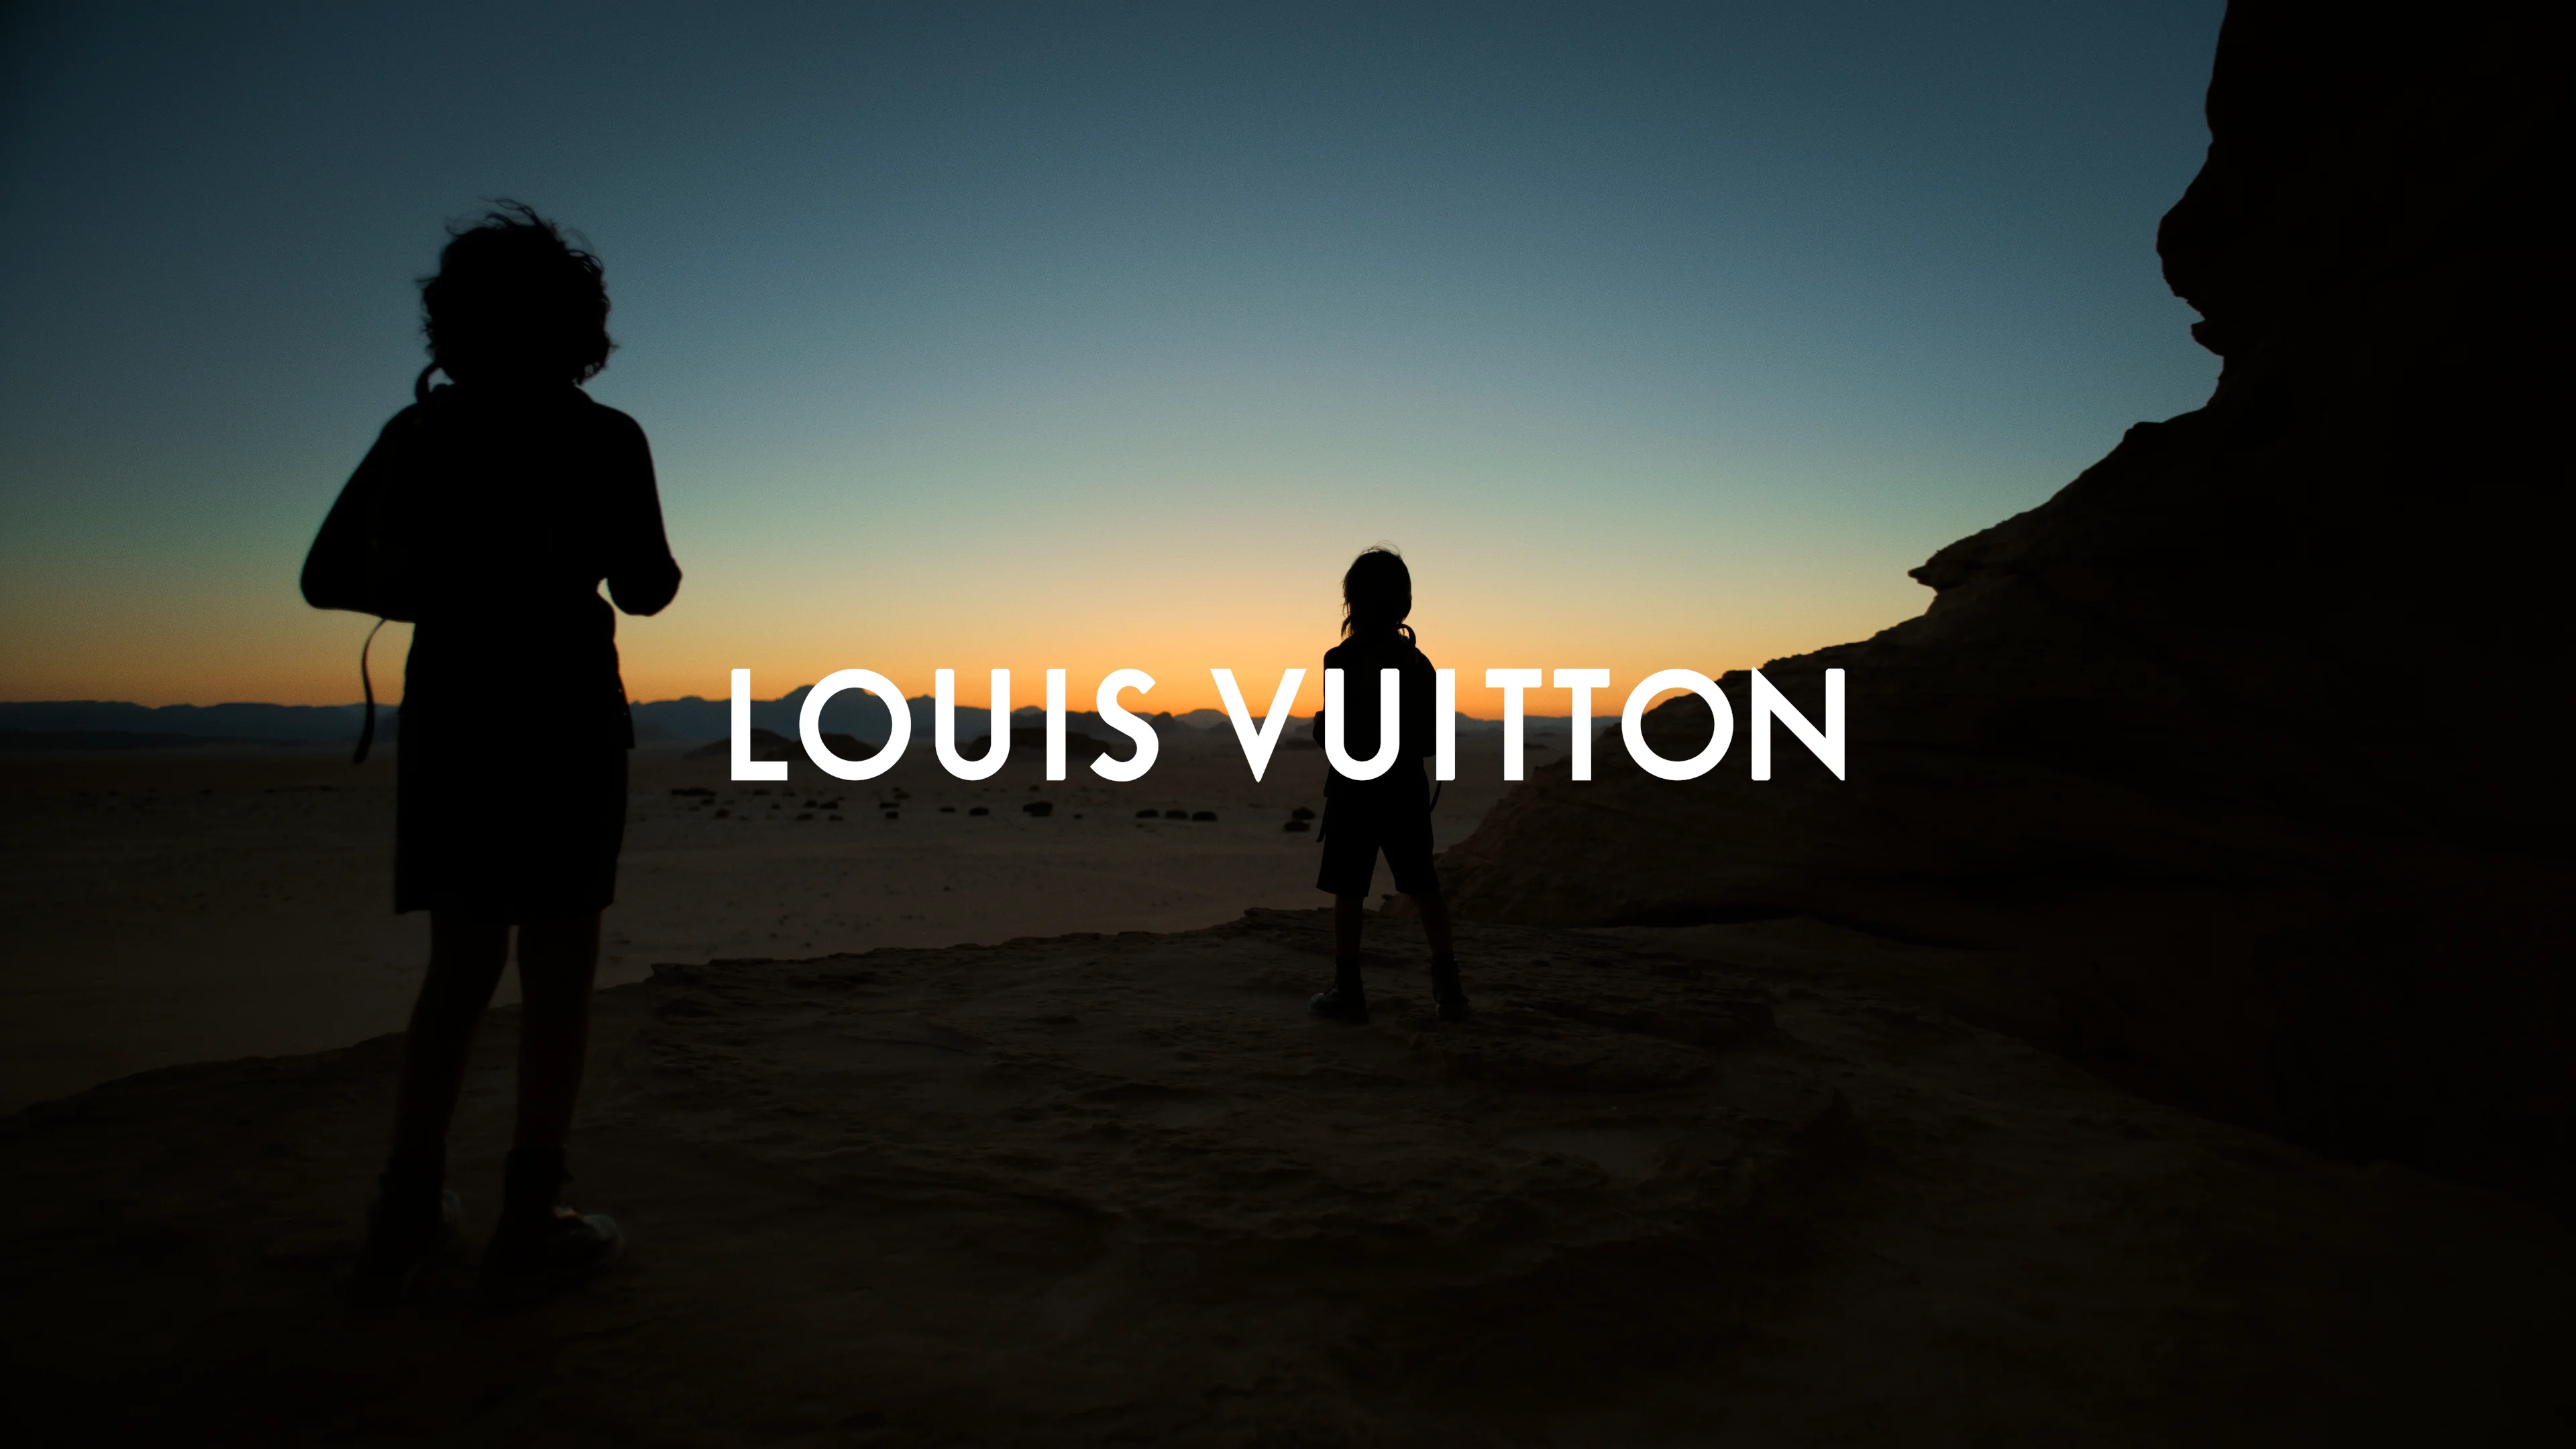 Towards a dream  LOUIS VUITTON ®